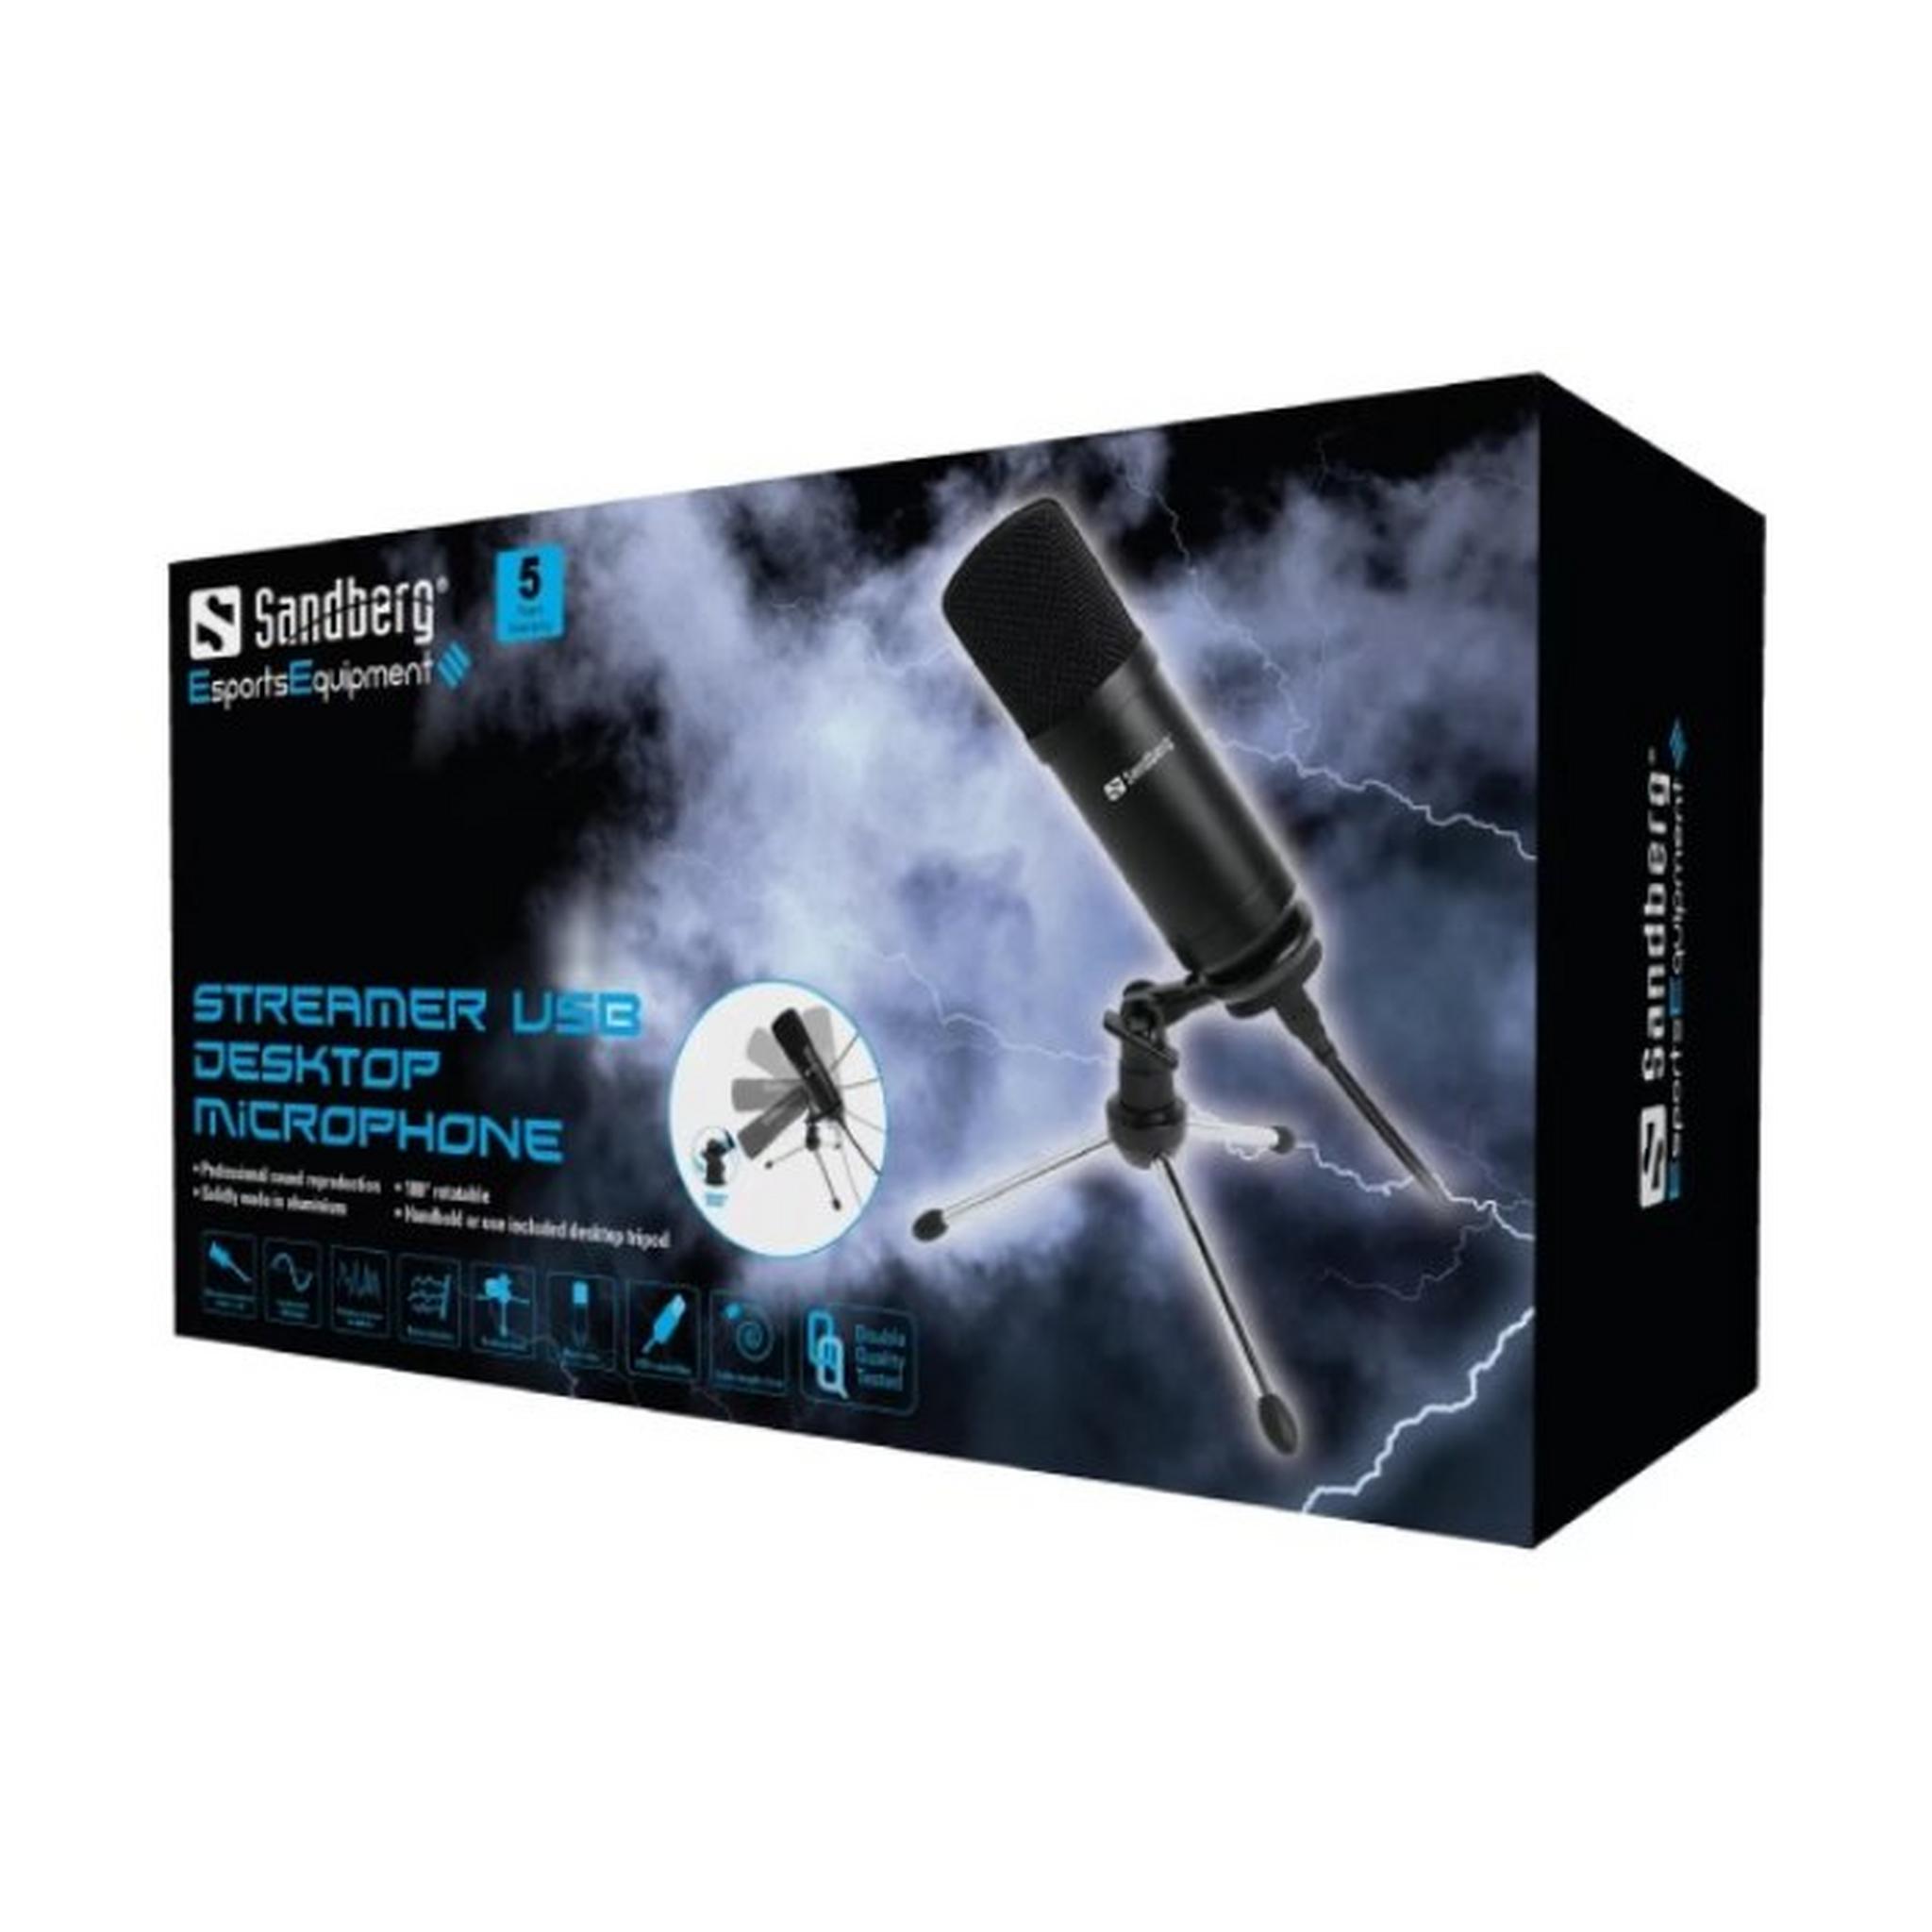 Sandberg Streamer USB Desk Gaming Microphone - Black